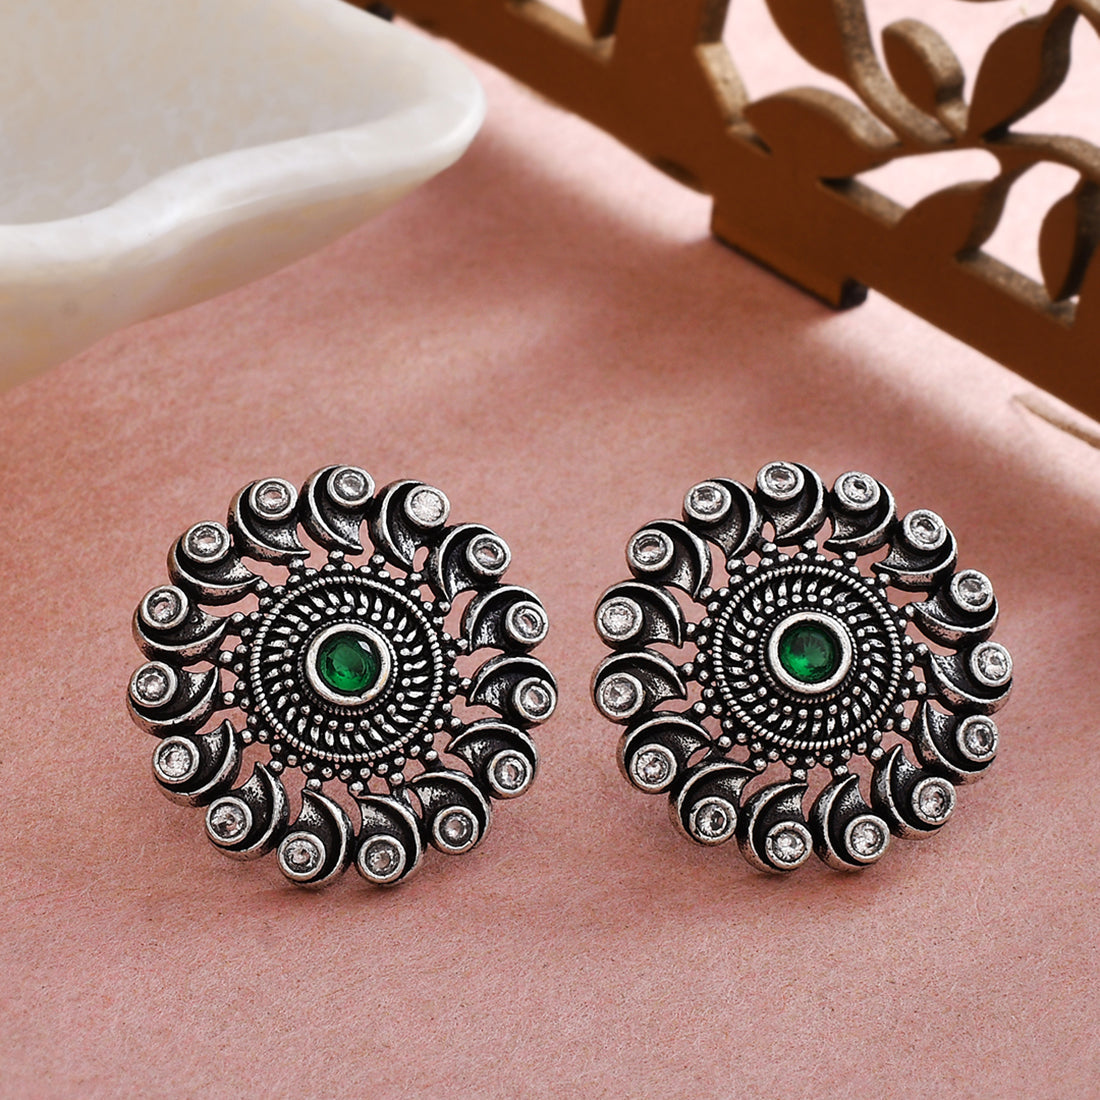 Women's Abharan Green And White Round Cut Stones Stud Earrings - Voylla